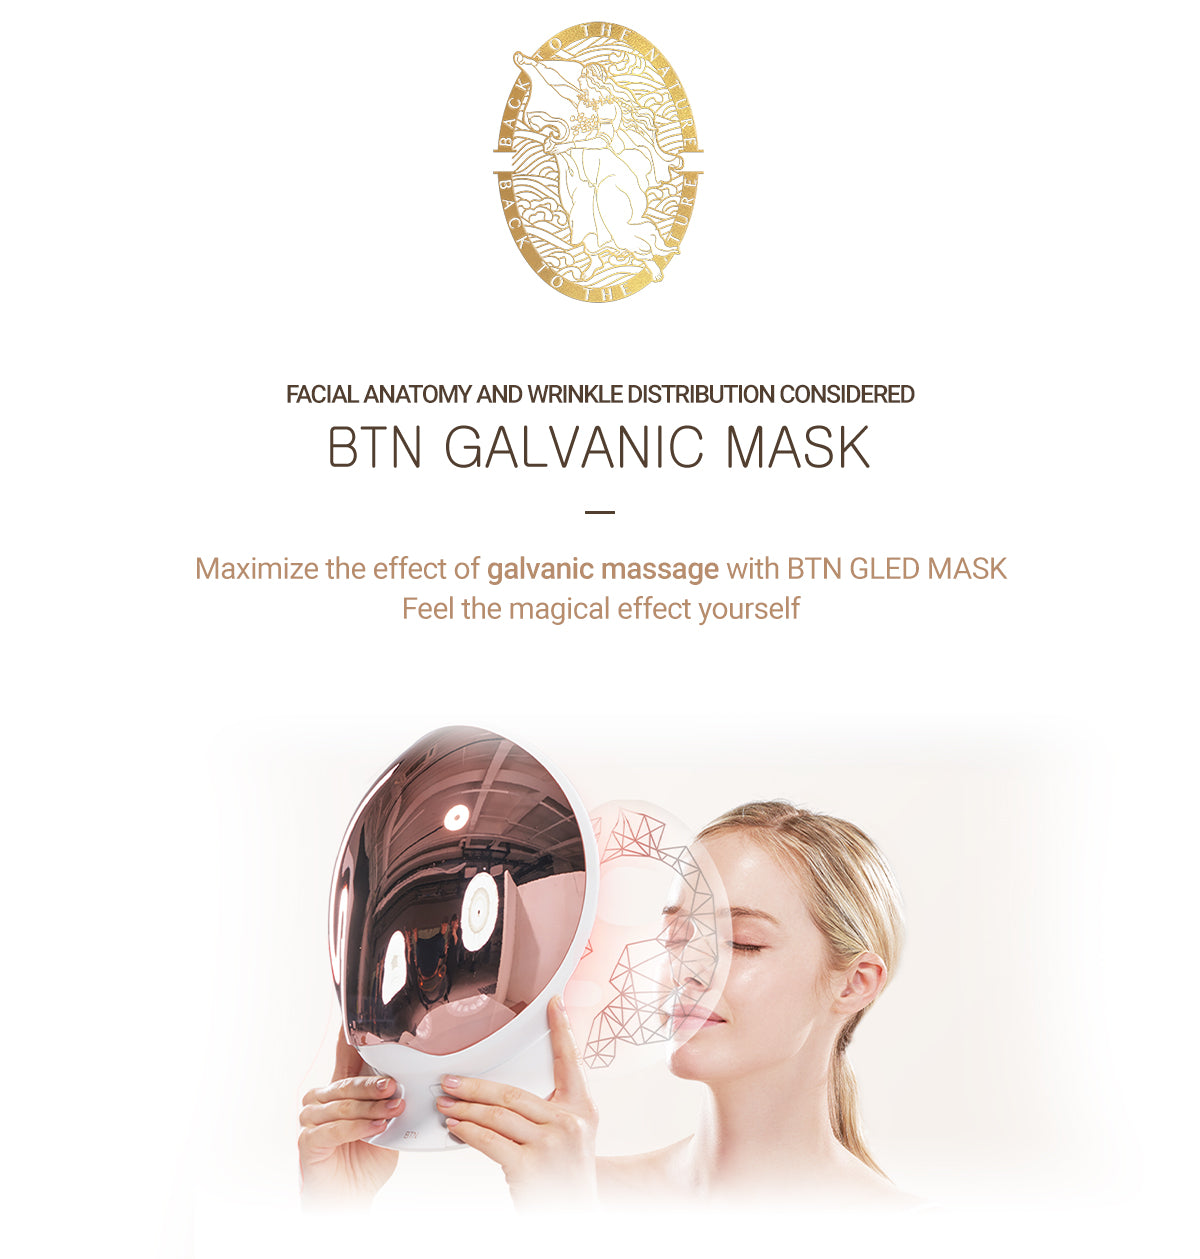 Facial Anatomy And Wrinkle Distribution Considered BTN Galvanic Mask